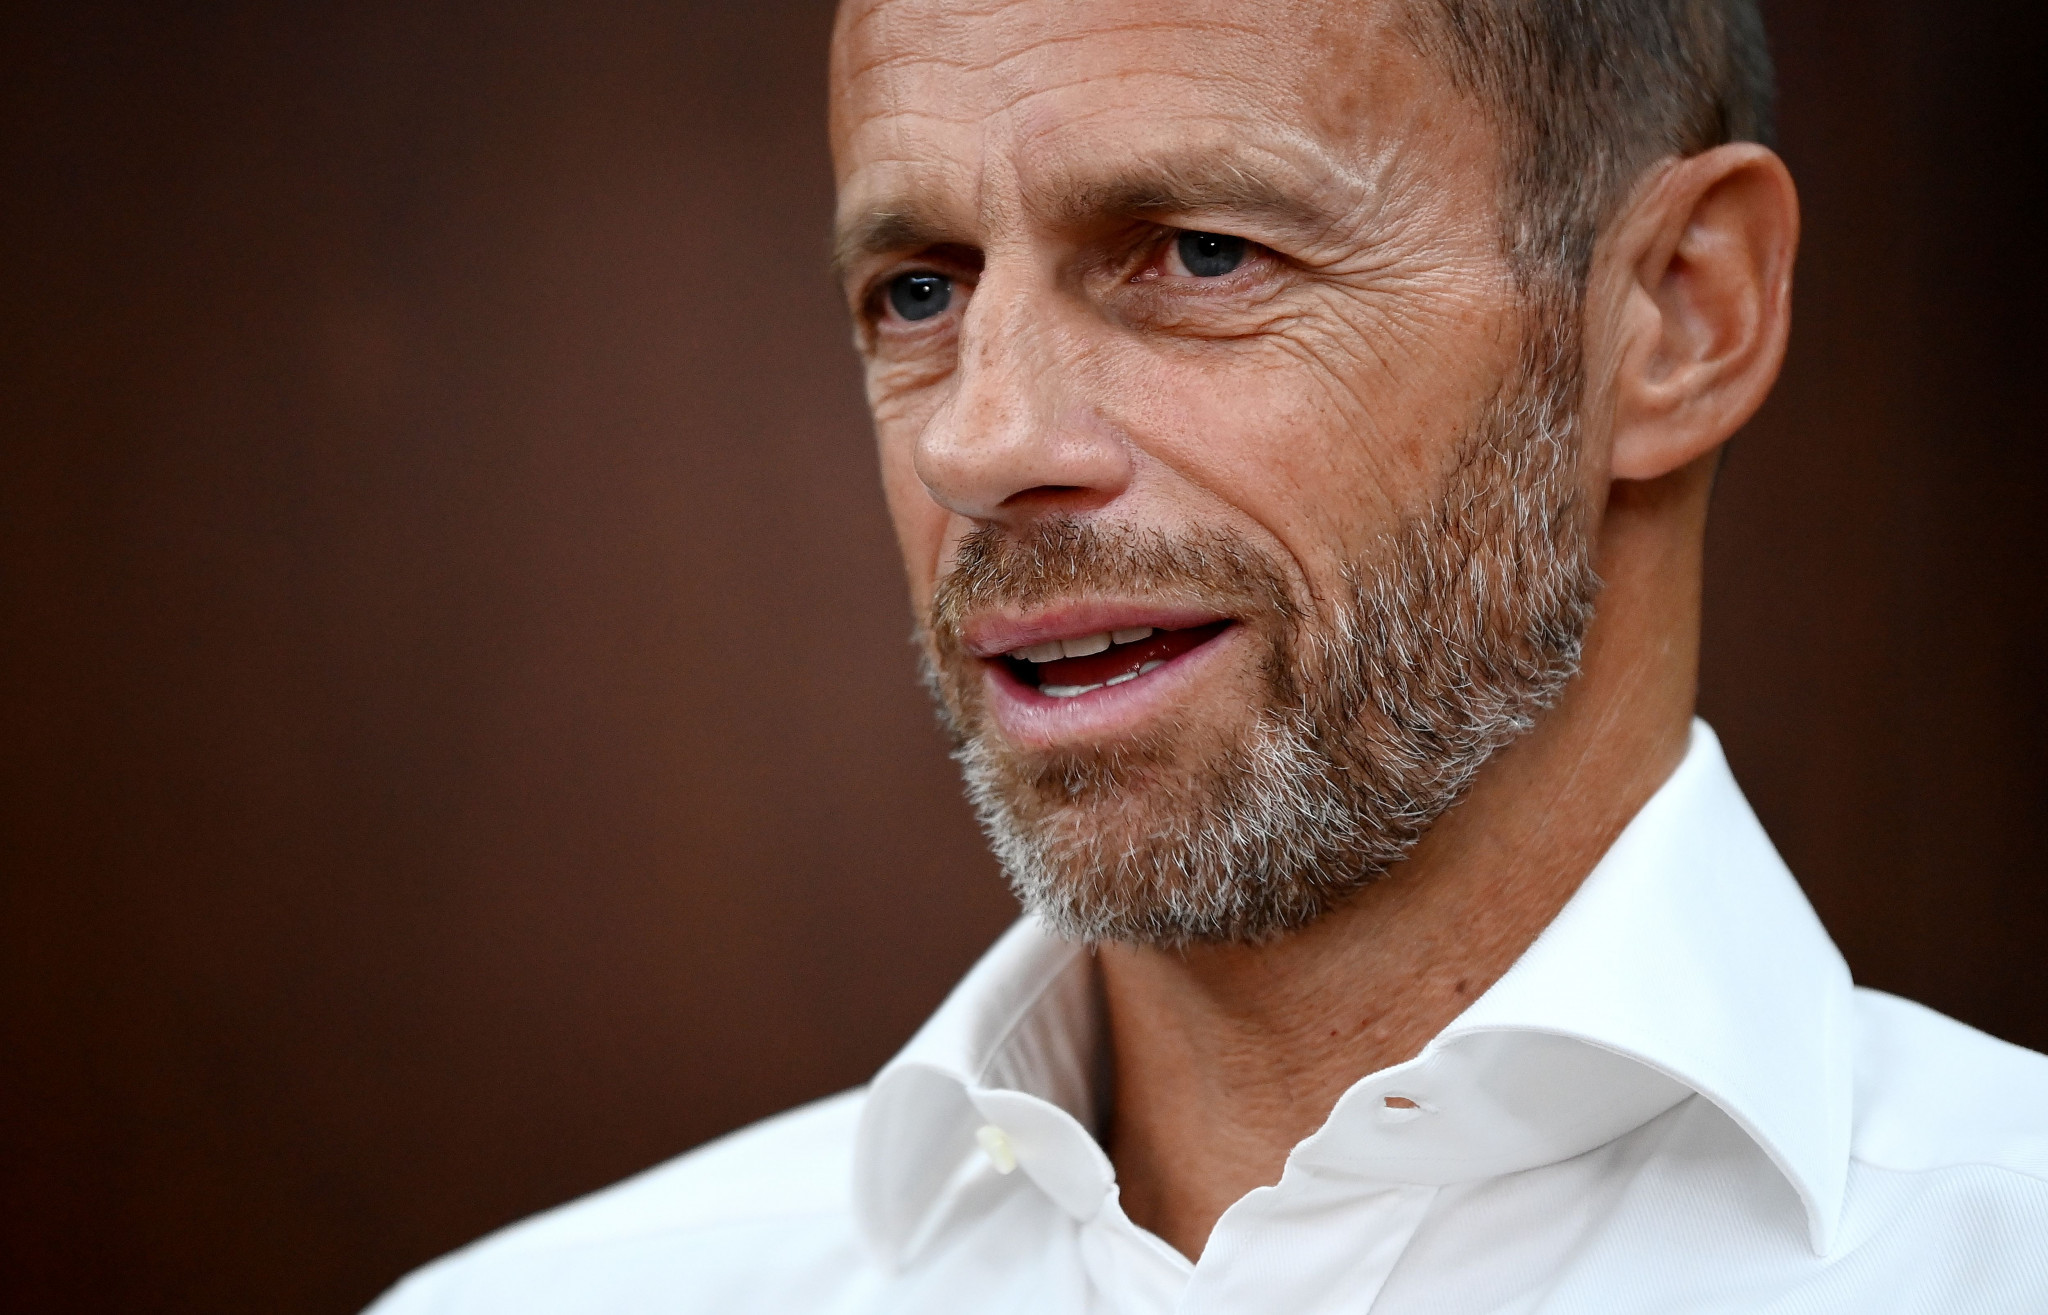 UEFA President Aleksander Čeferin said the decision was a sensible first step ©Getty Images